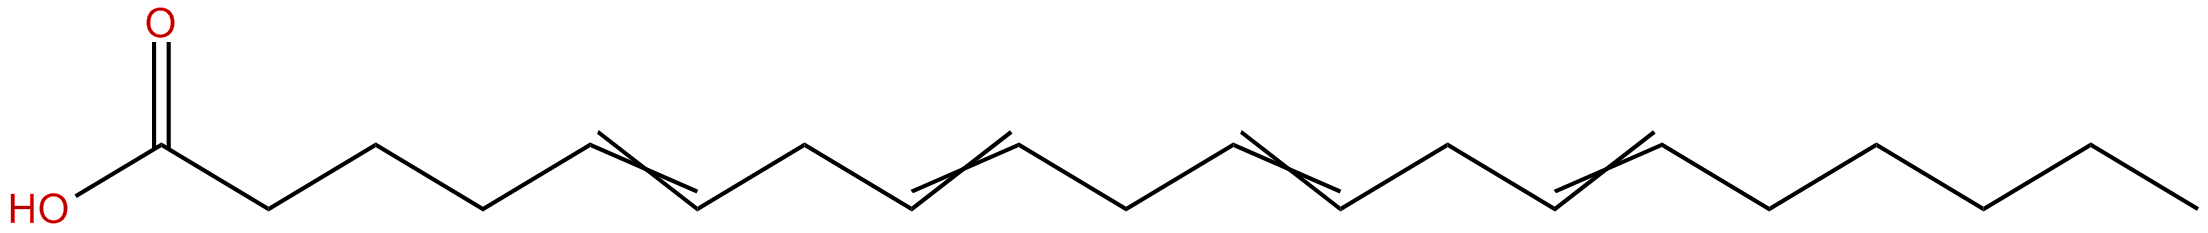 Image of 5,8,11,14-eicosatetraenoic acid